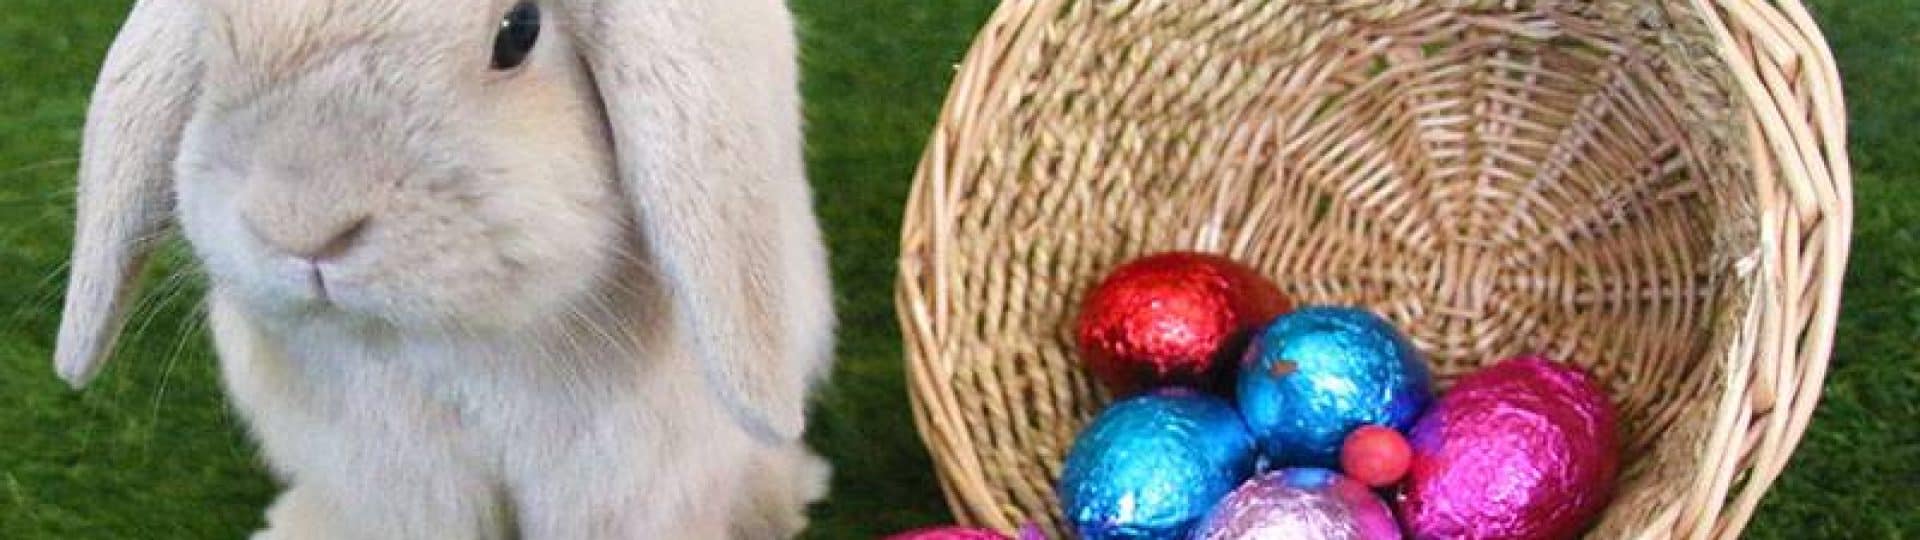 Top Tips for an Eggcellent Easter Hunt! - Australian Outdoor Living